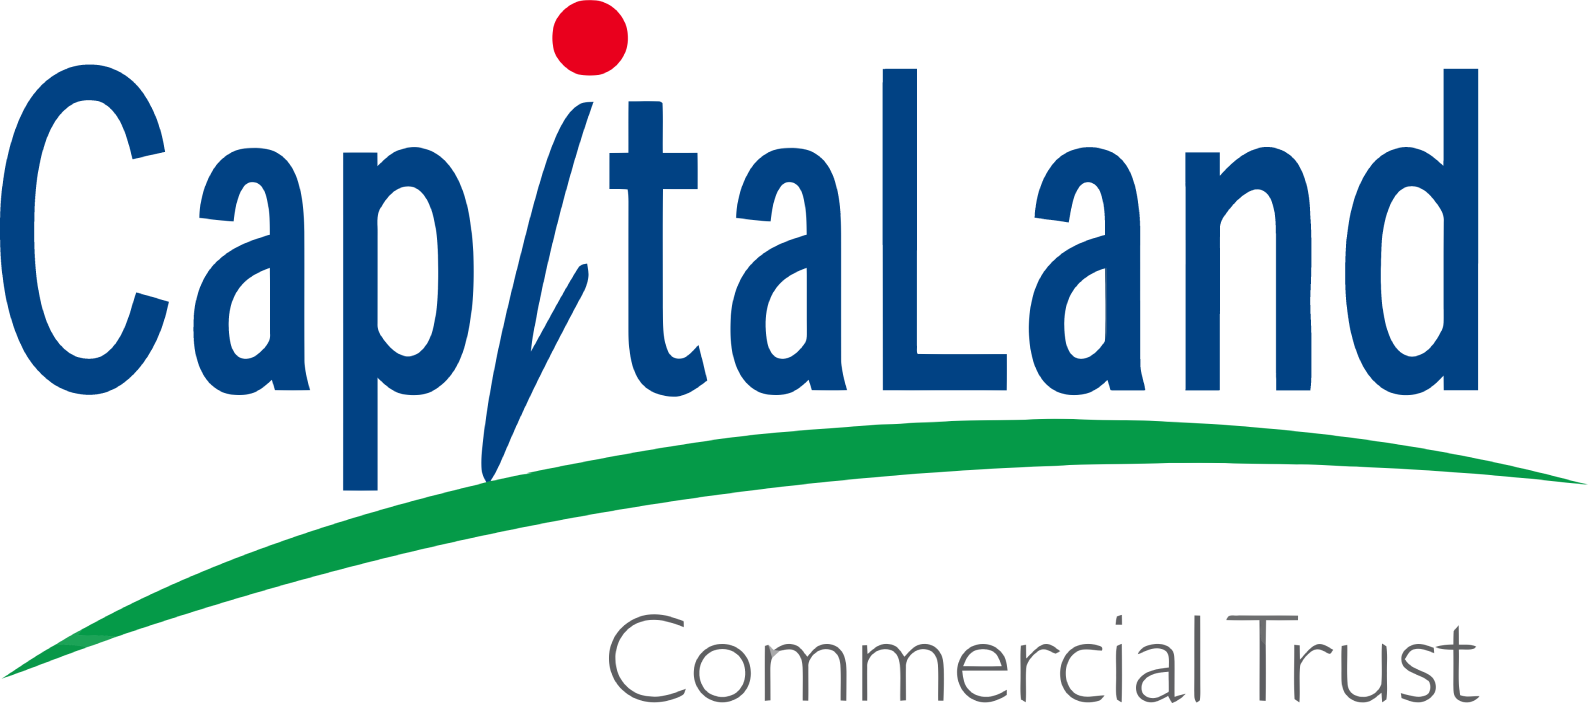 CapitaLand Commercial Trust logo large (transparent PNG)